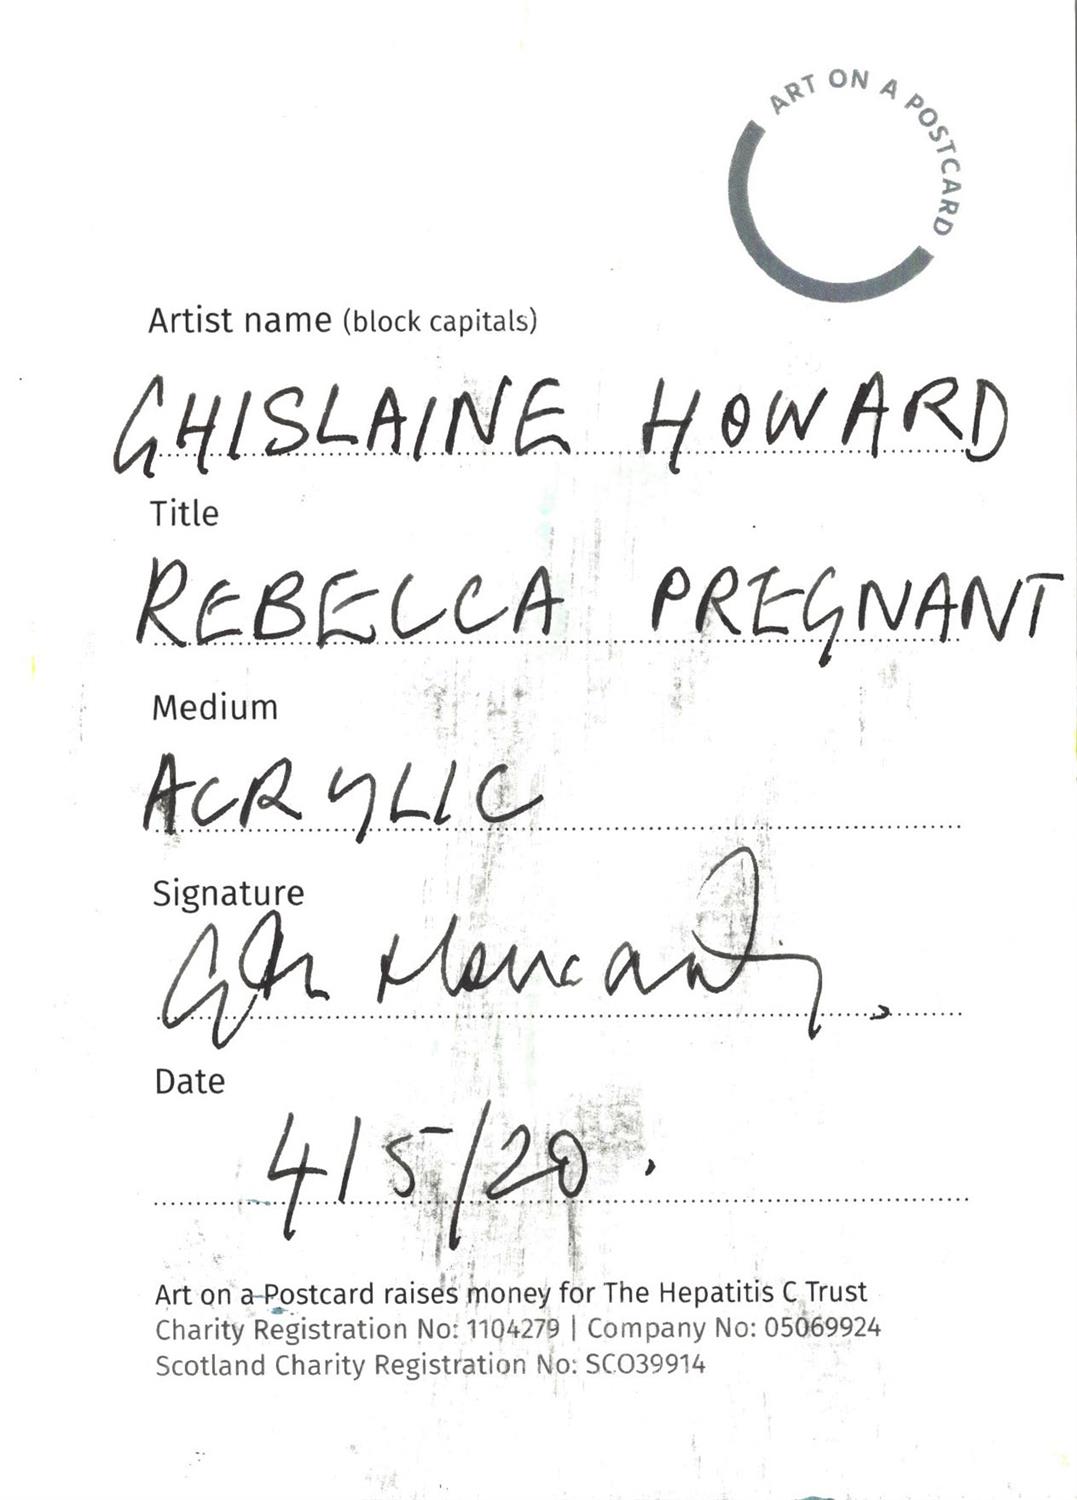 Ghislaine Howard, Rebecca Pregnant, 2020 - Image 3 of 3